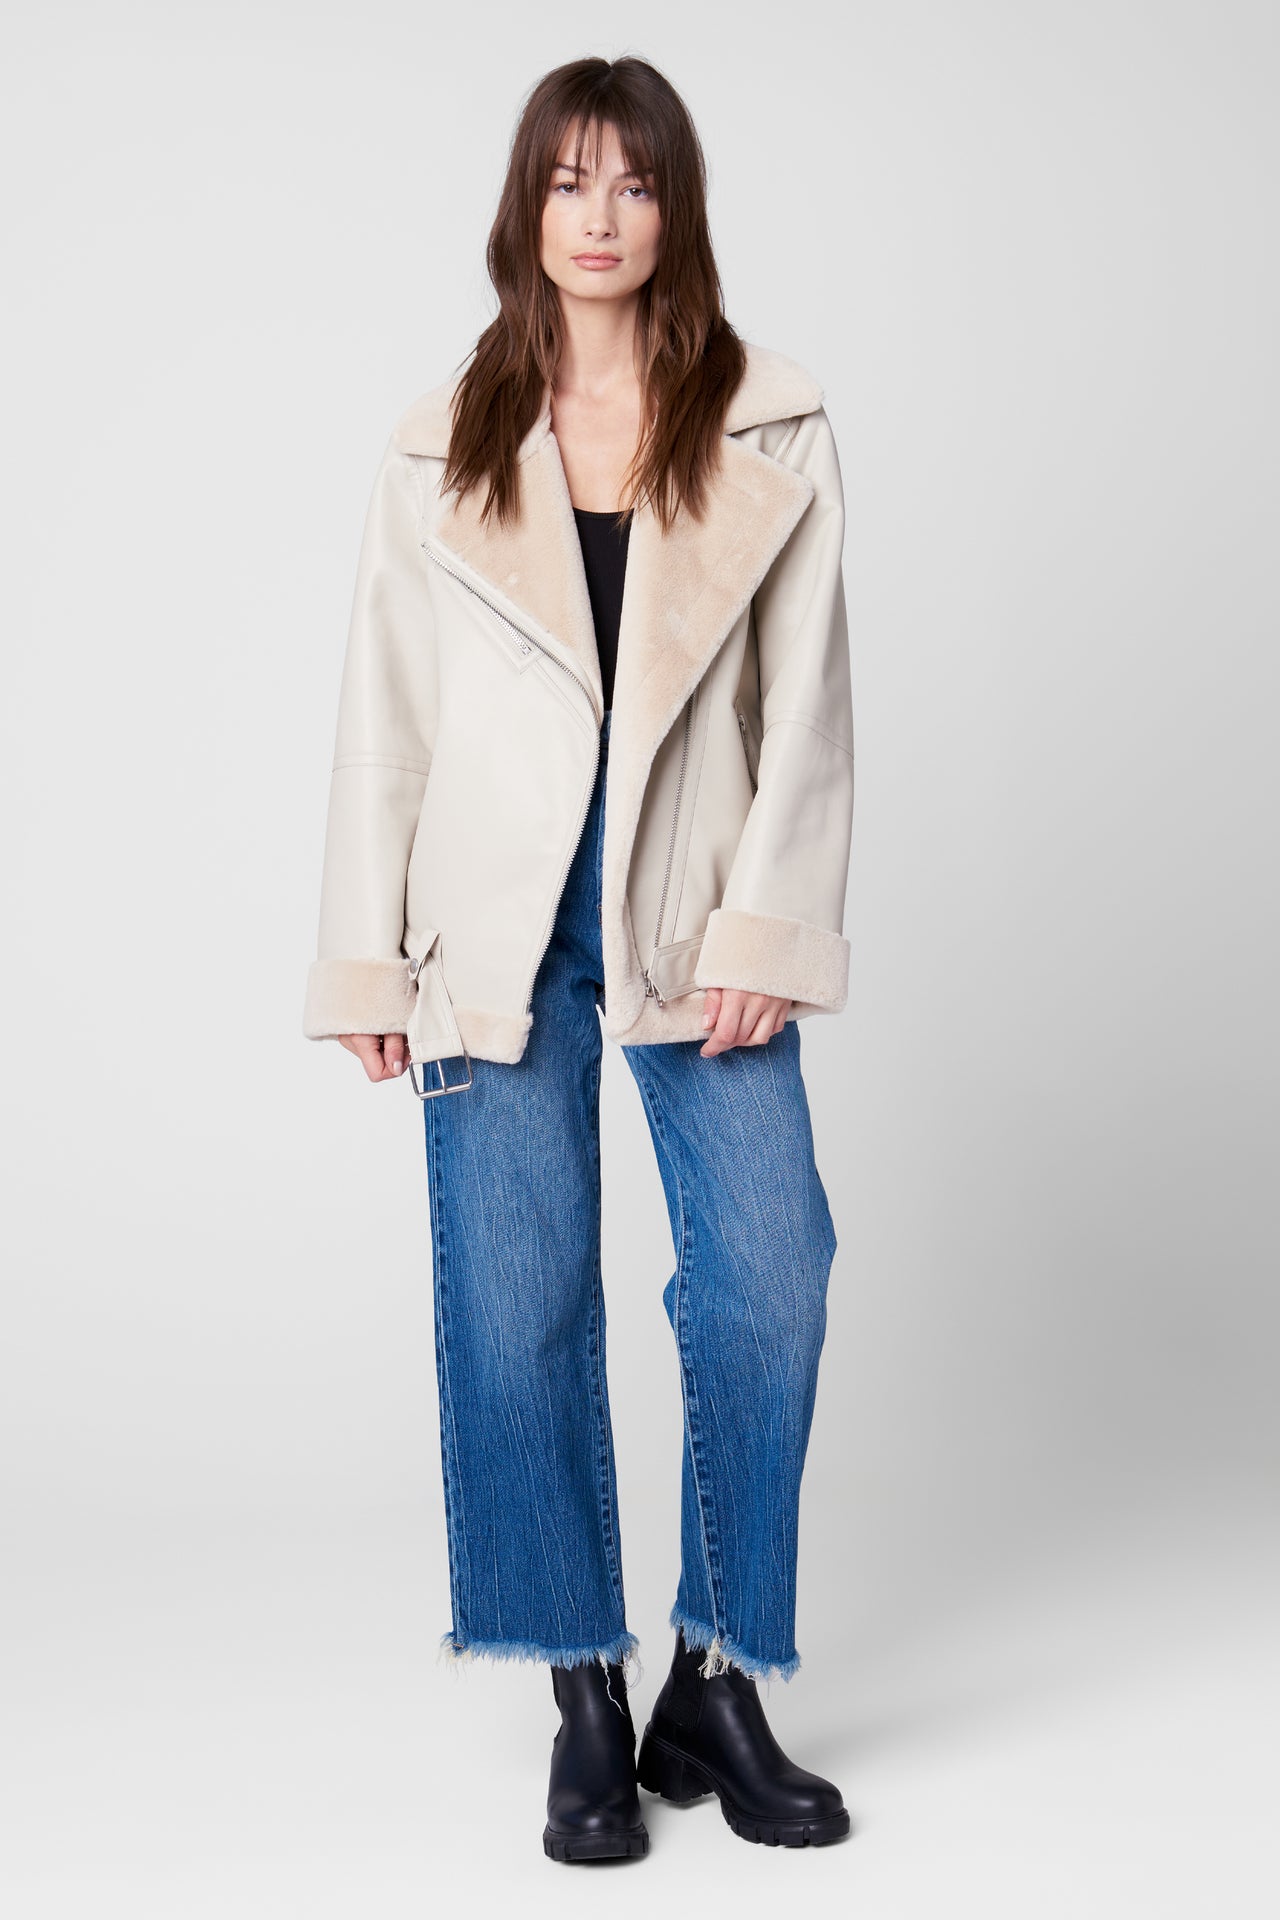 Break The Ice Coat White, Coat Jacket by Blank NYC | LIT Boutique